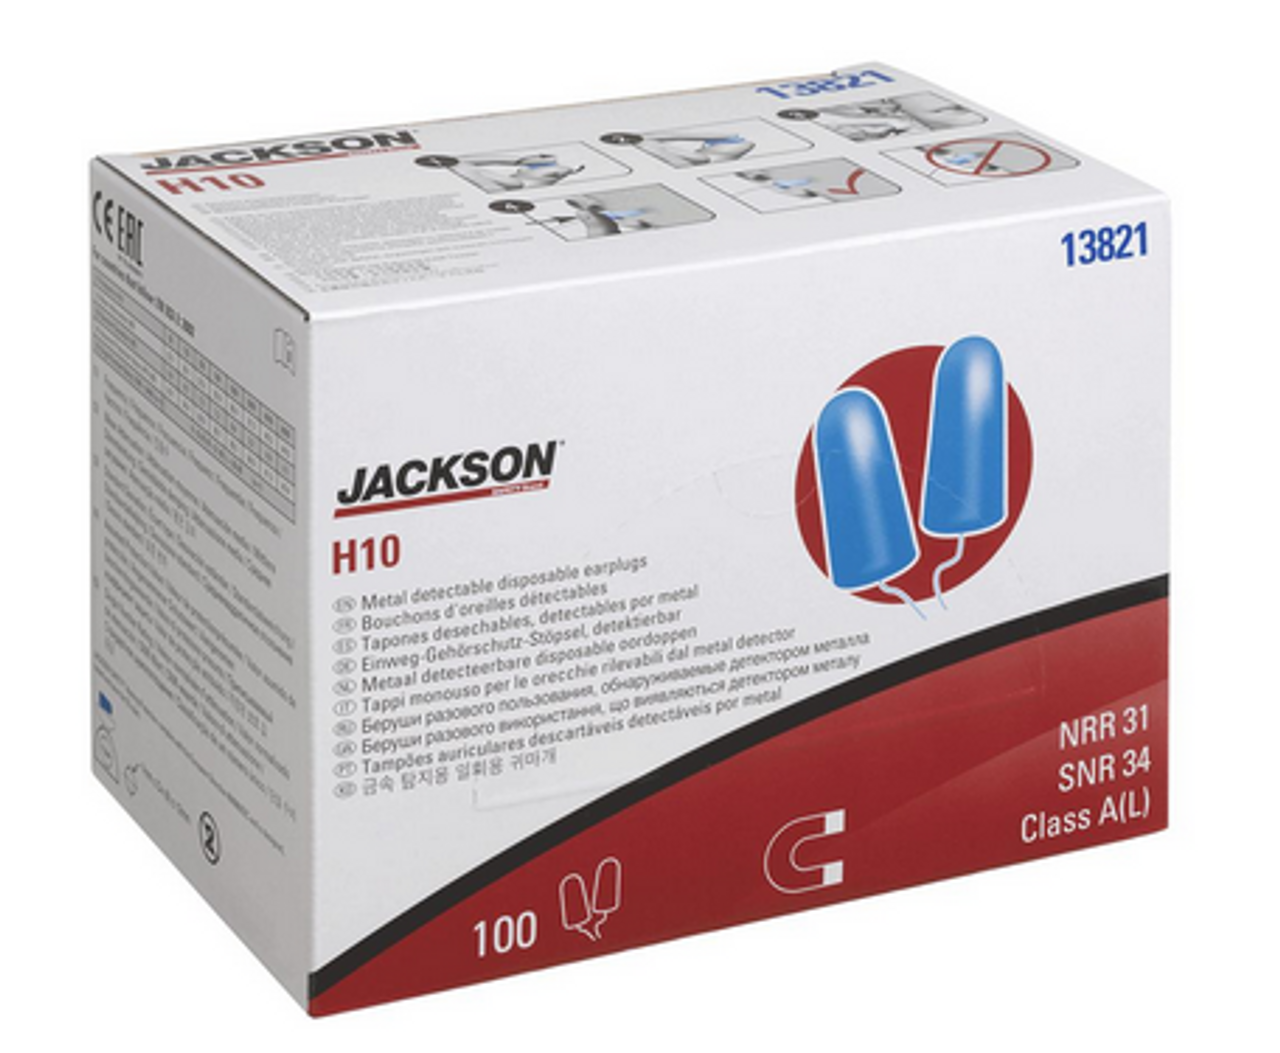 Jackson® Disposable Corded Foam Ear Plug - Metal Detectable - 31dB NRR - 100 Pack  13821